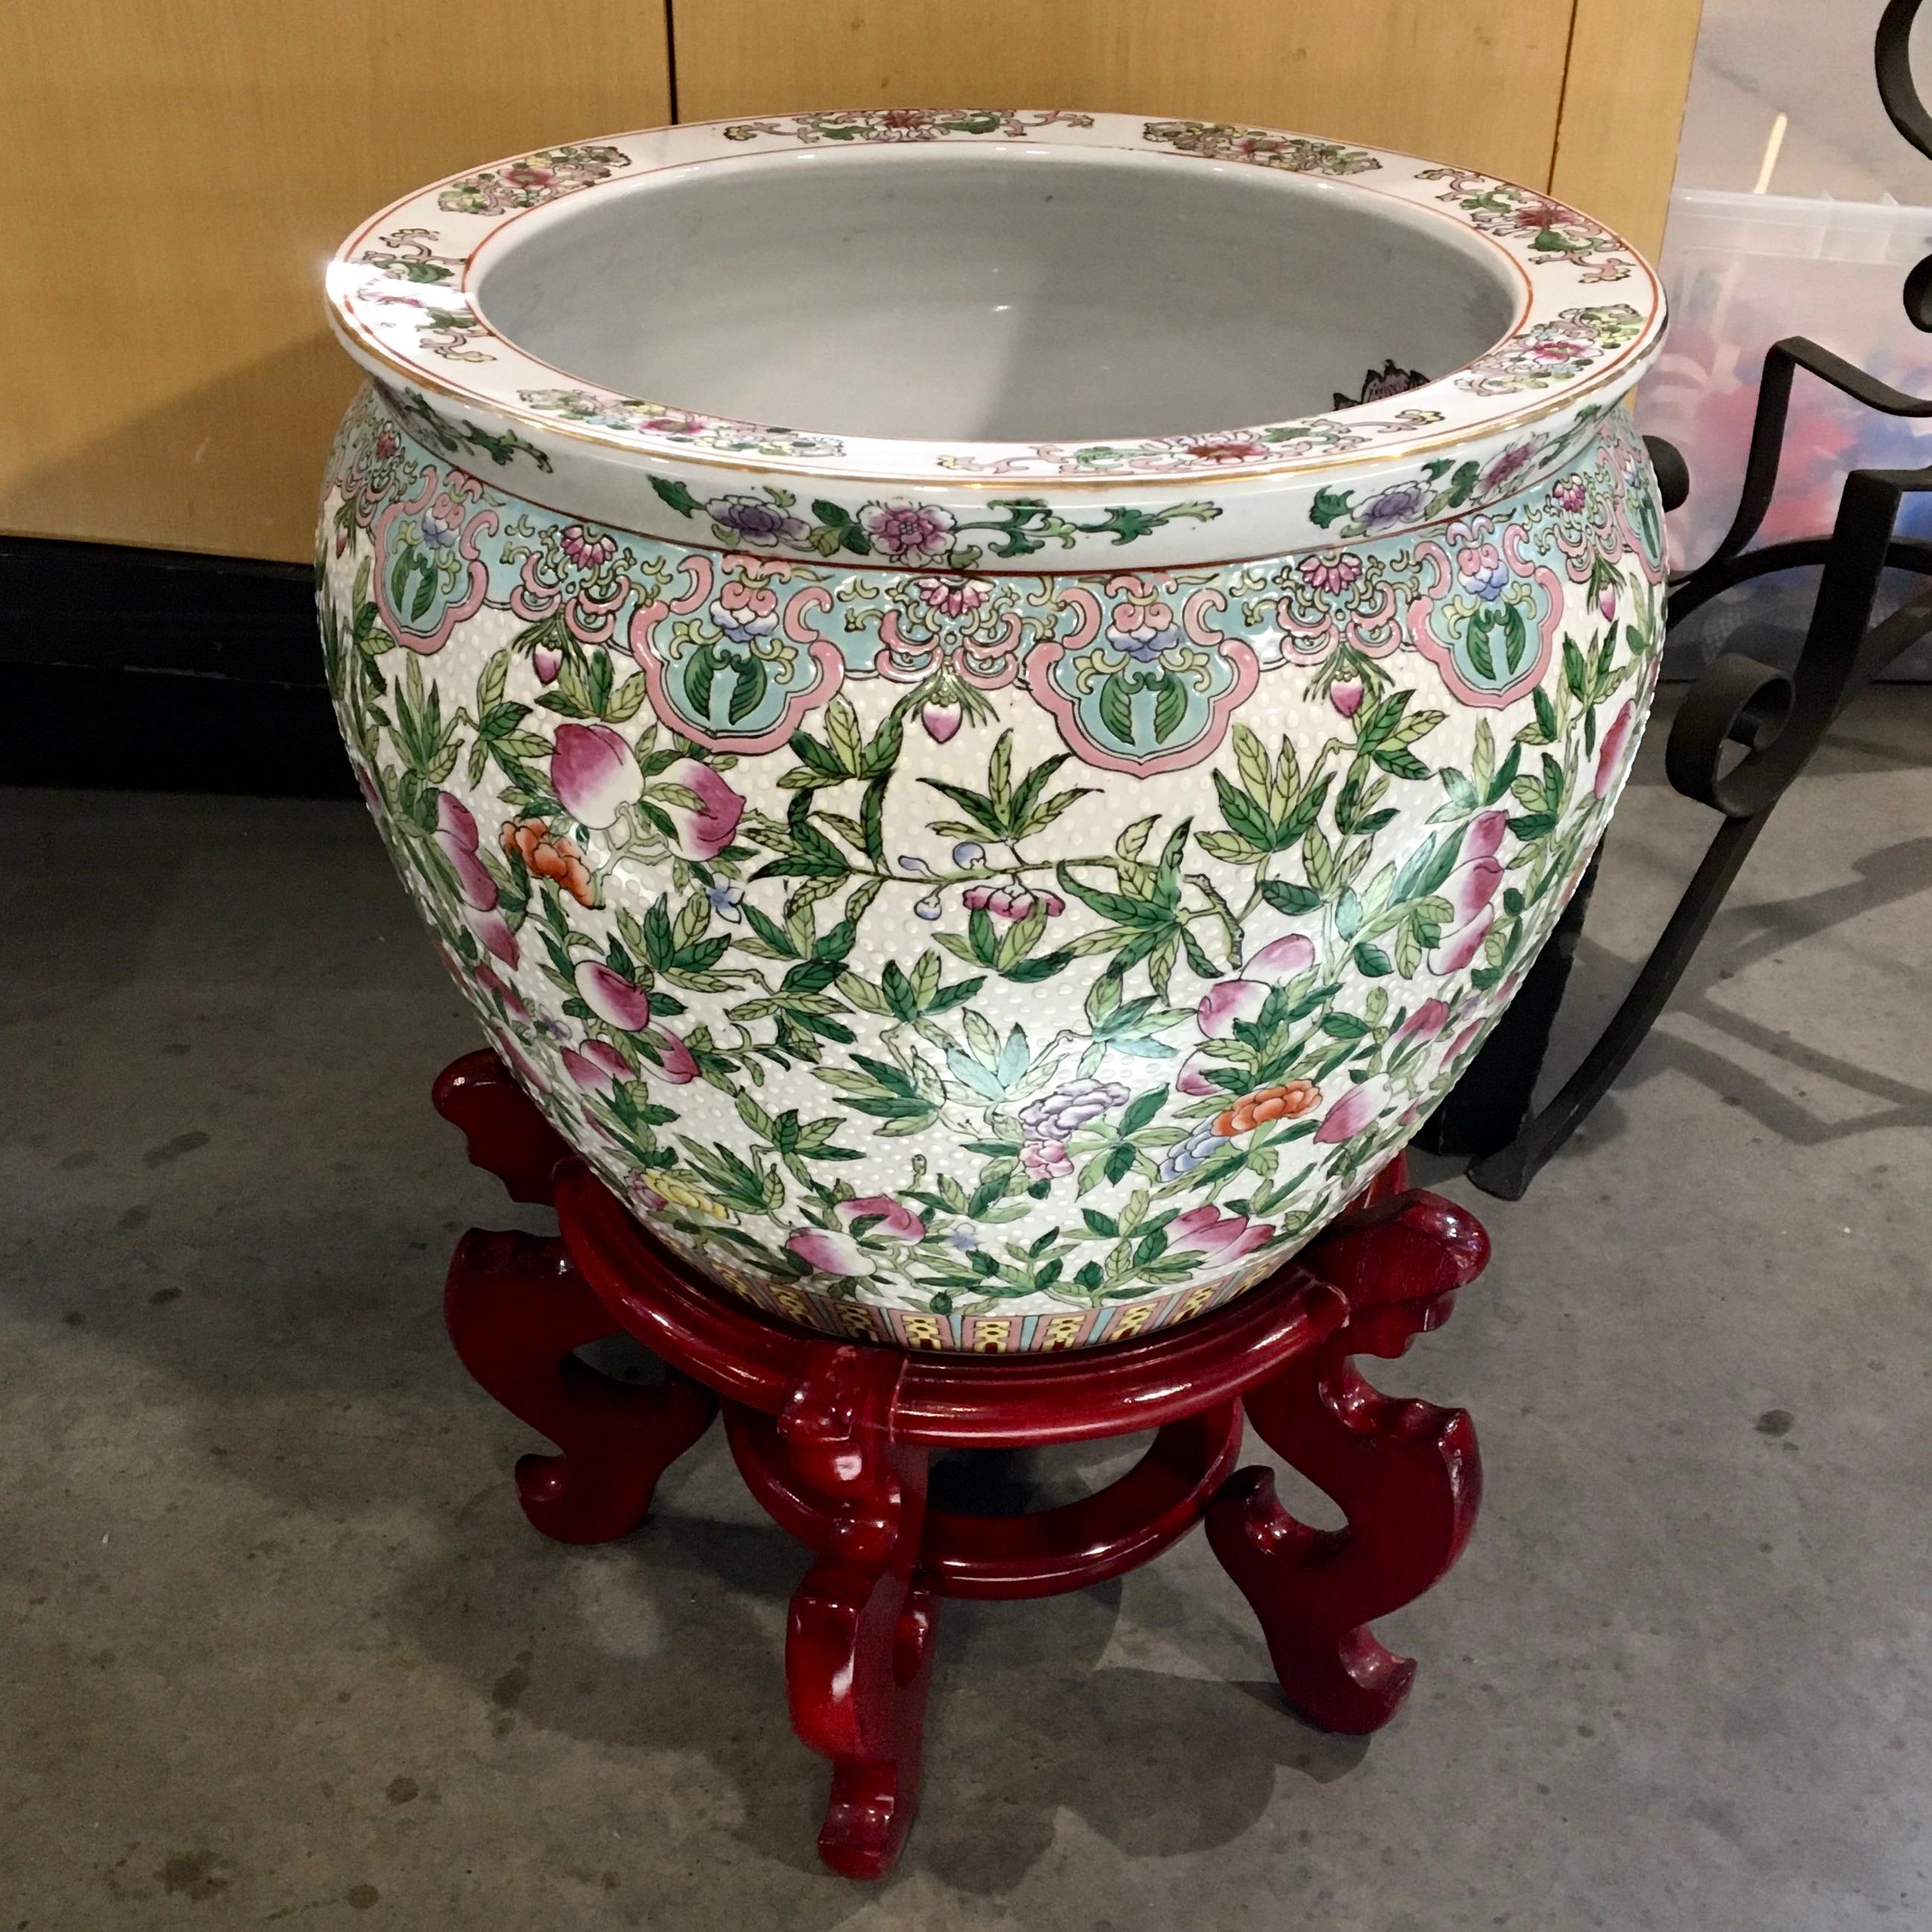 Base:13"x 9" Pot:14.5"x 12" Antique Chinese Floral Porcelain Vase & Stand